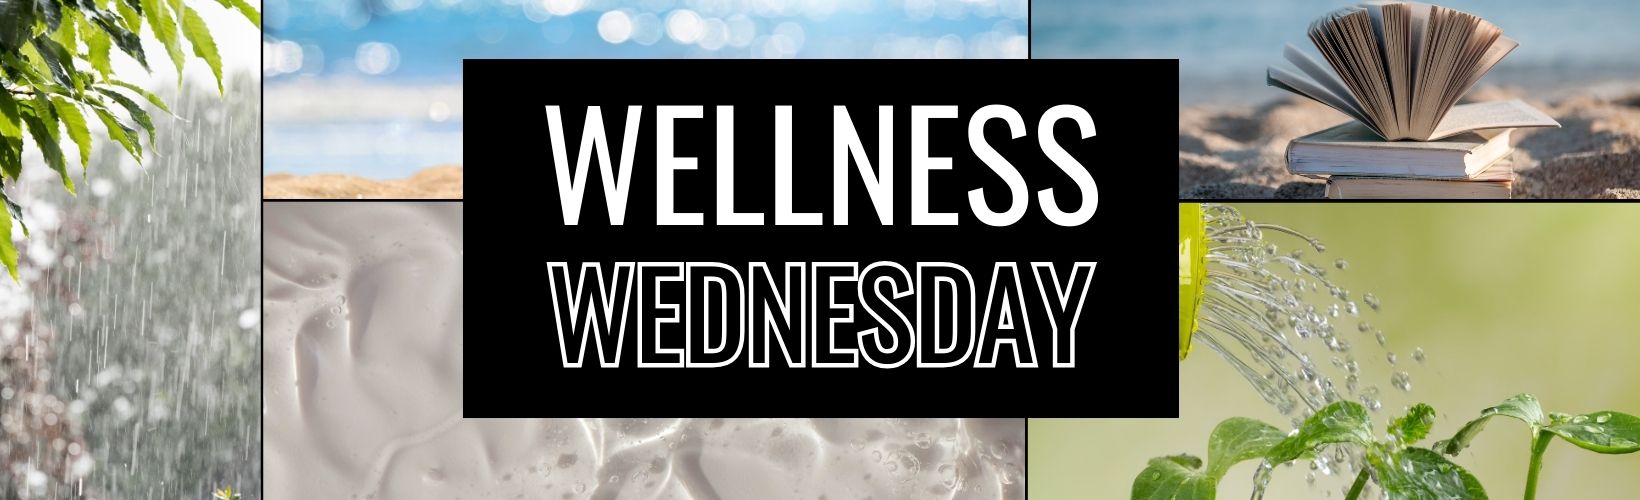 Wellness Wednesday: Healthy Valentine’s Day Snacks and Treats